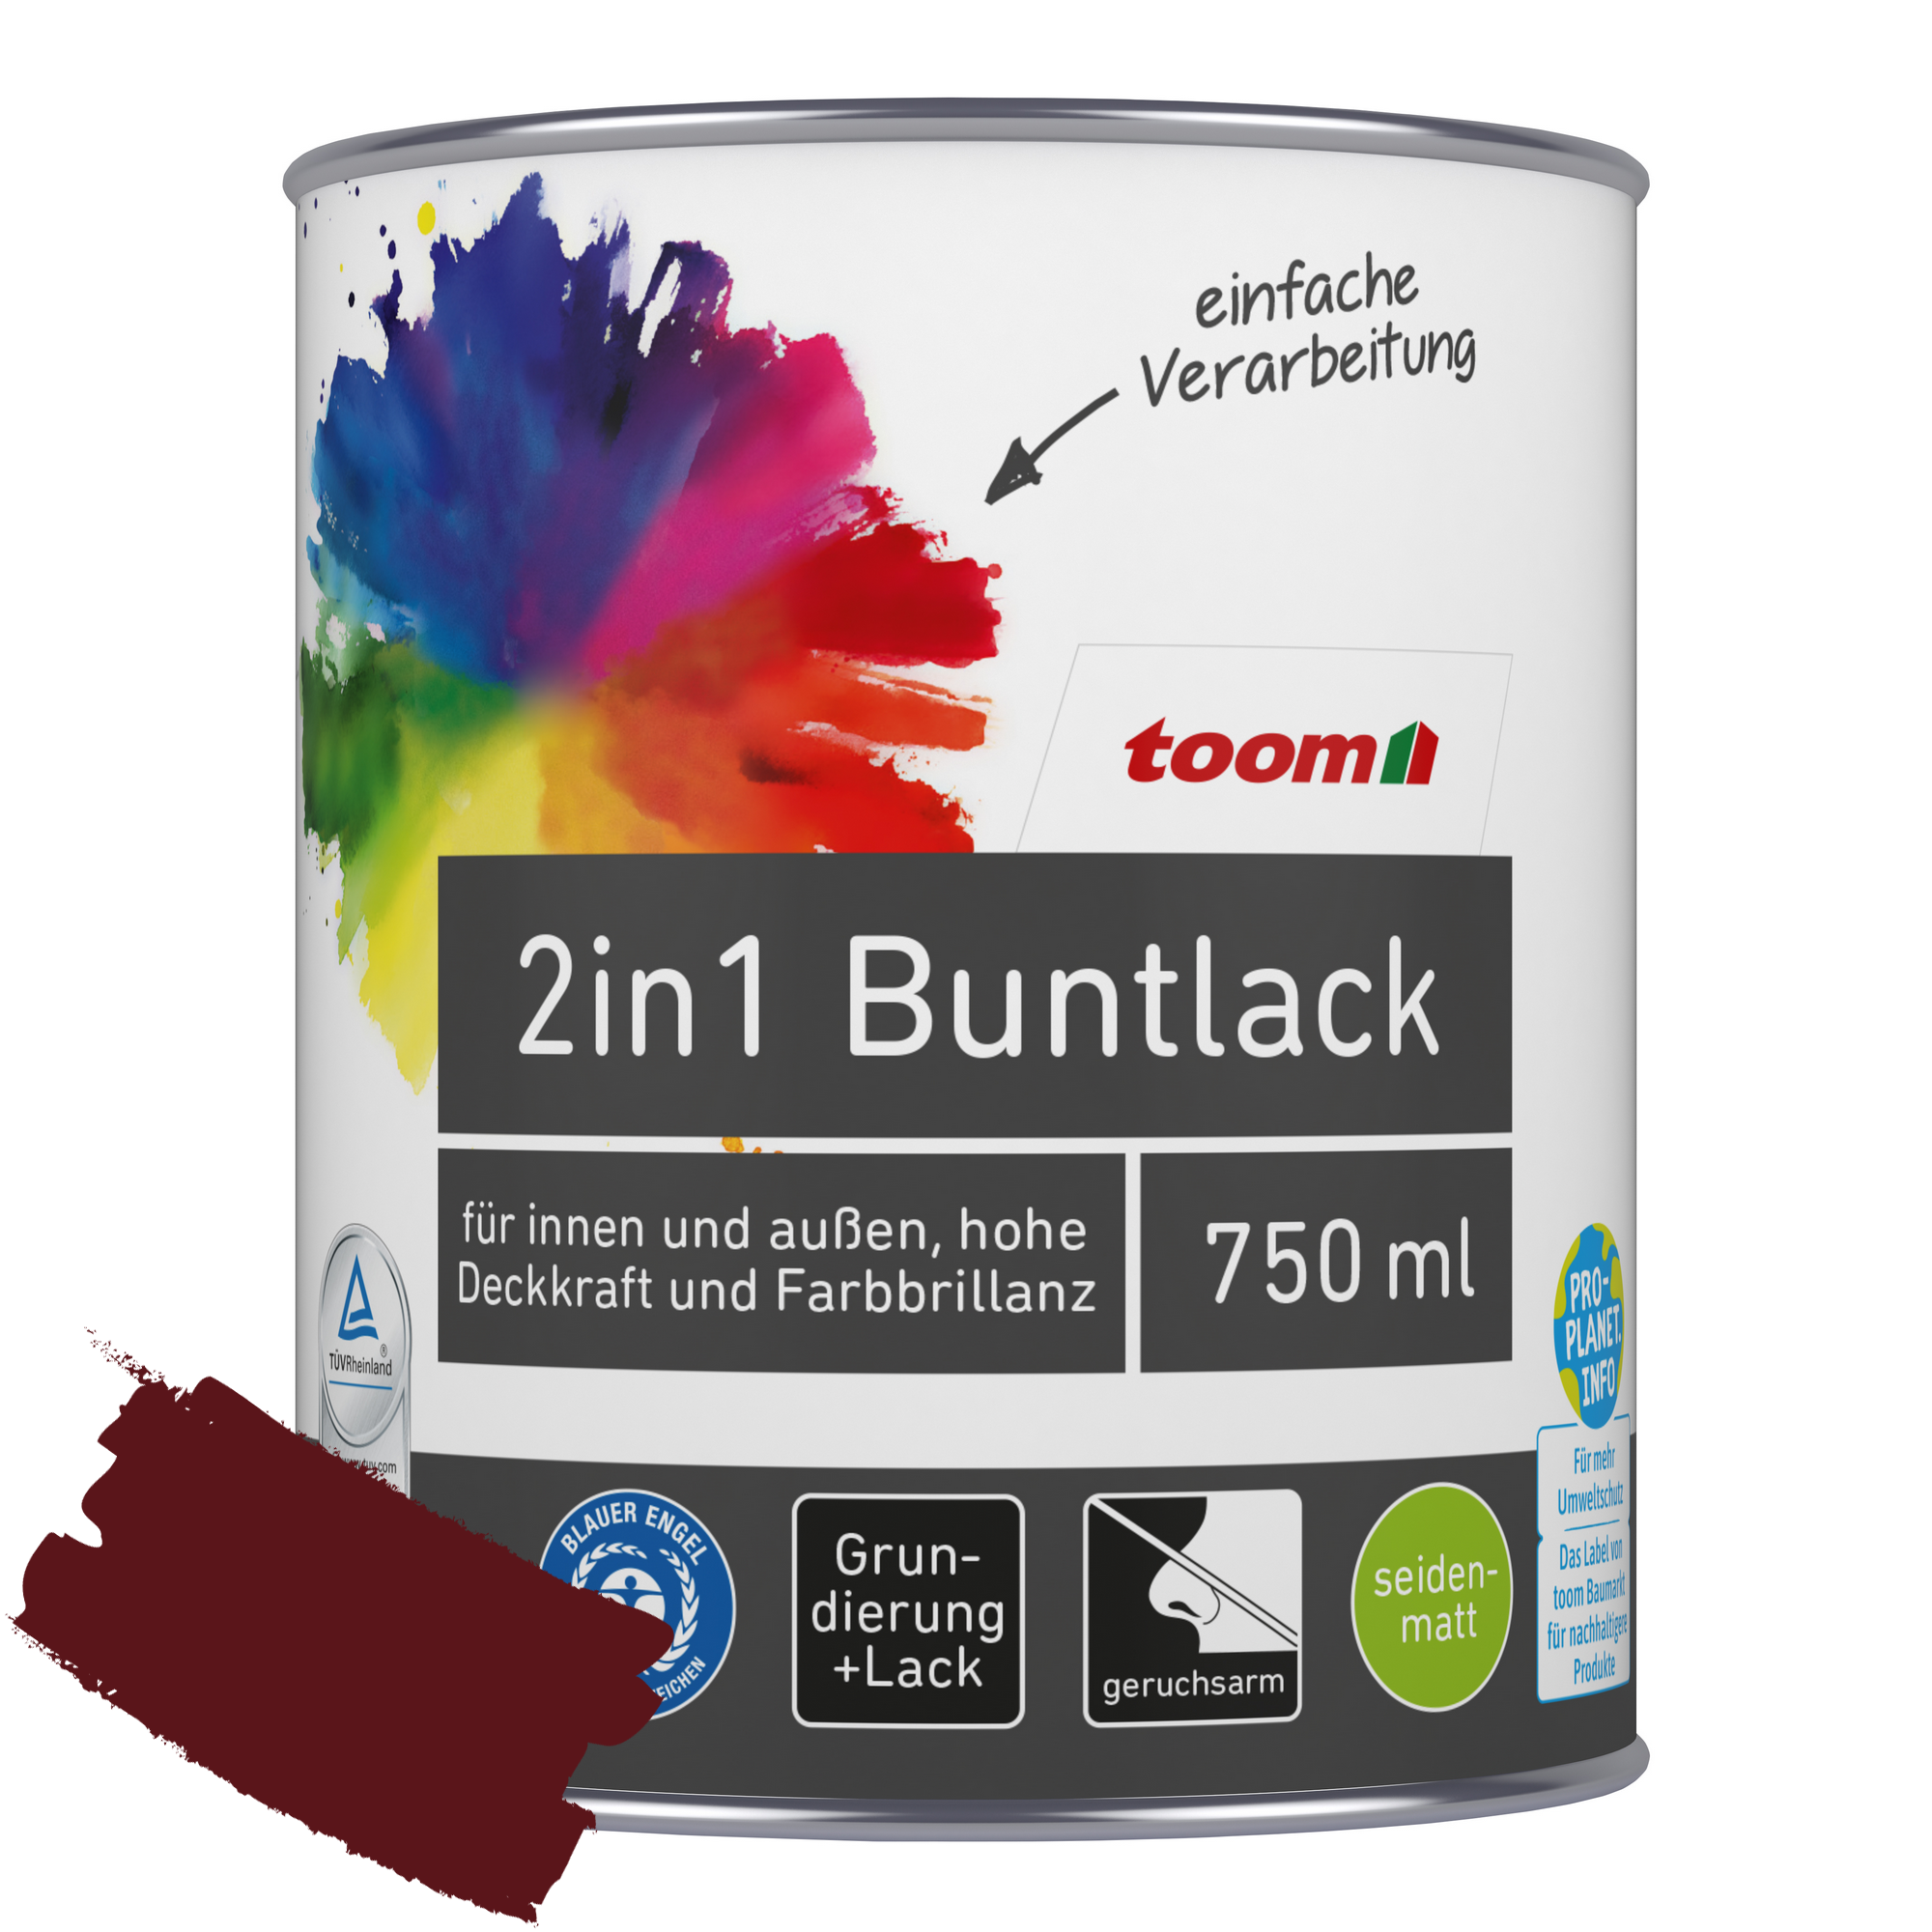 2in1 Buntlack 'Abendrot' purpurrot seidenmatt 750 ml + product picture